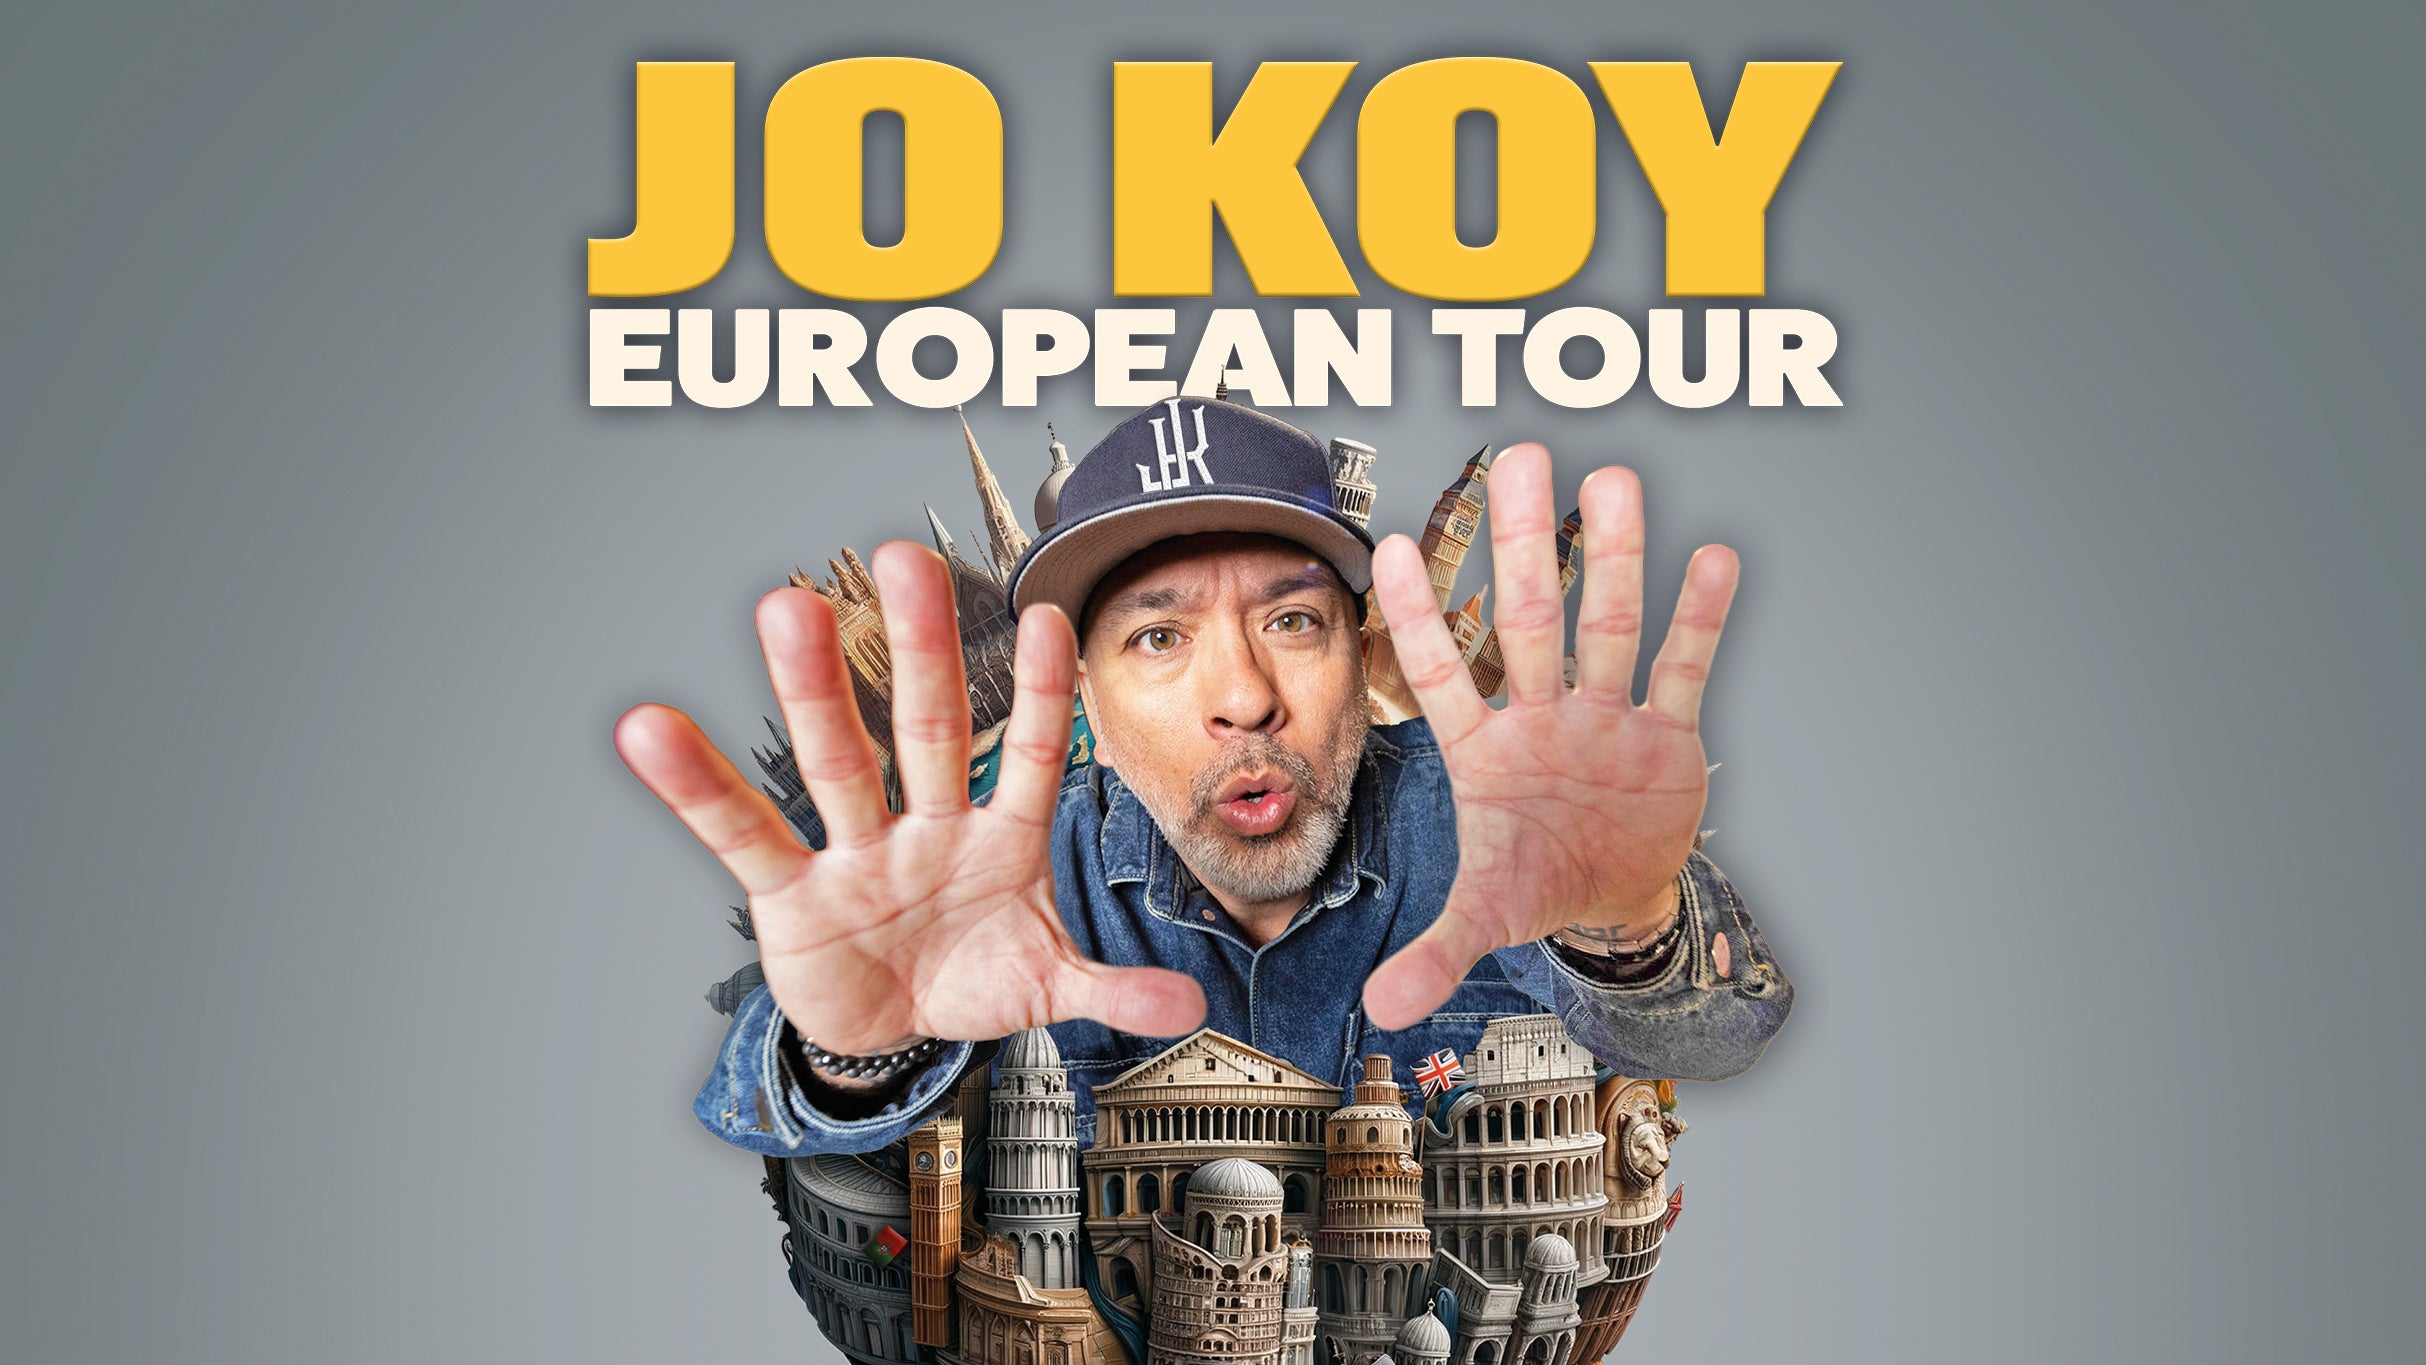 Jo Koy - World Tour in London promo photo for Ticketmaster presale offer code